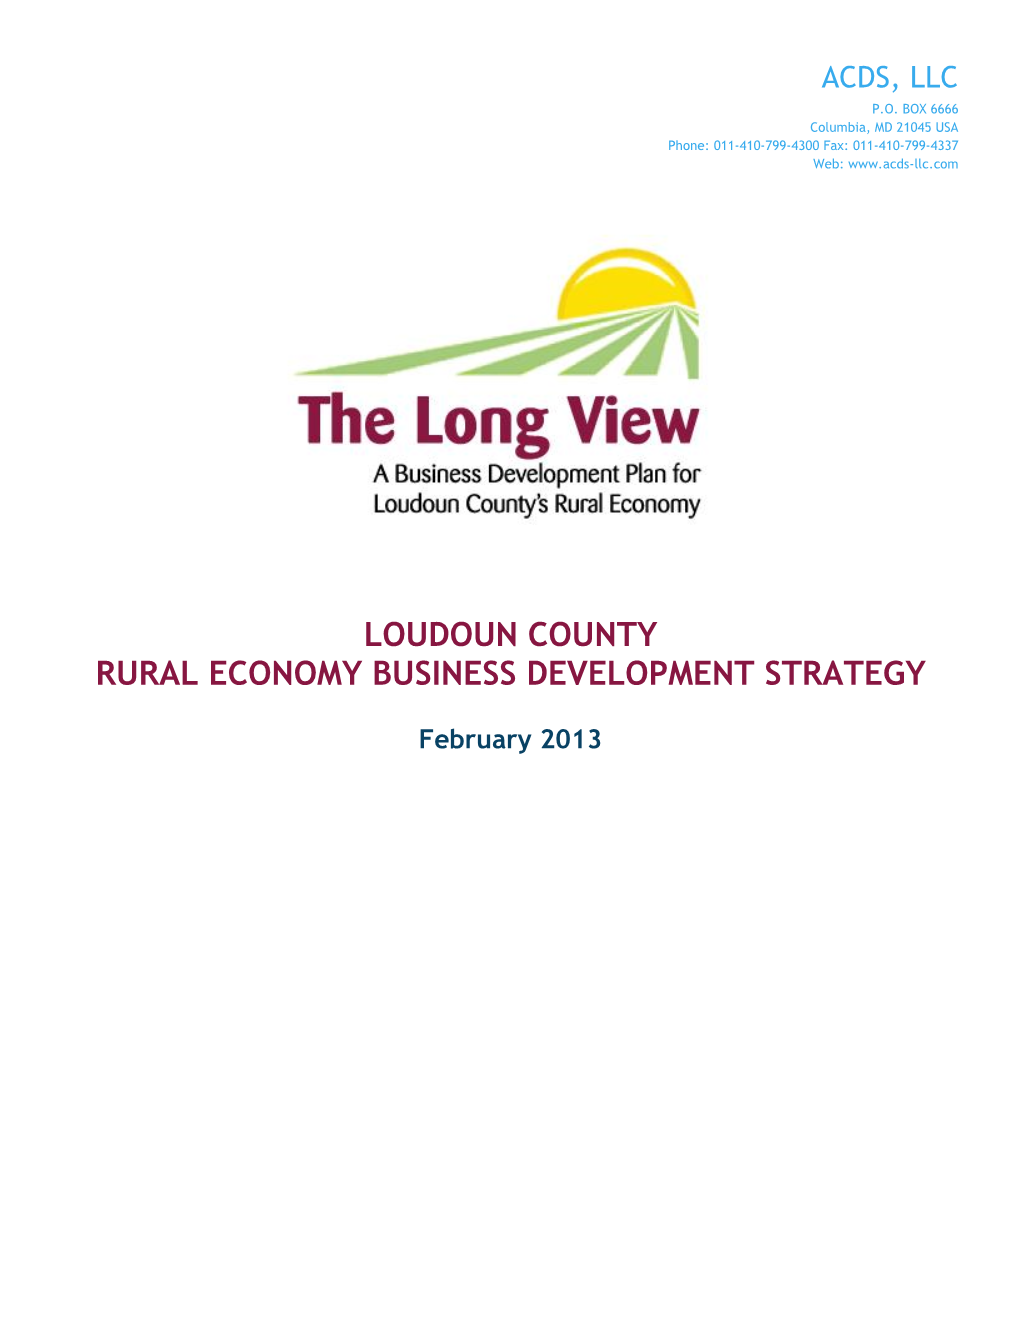 Loudoun County Rural Economy Business Development Strategy